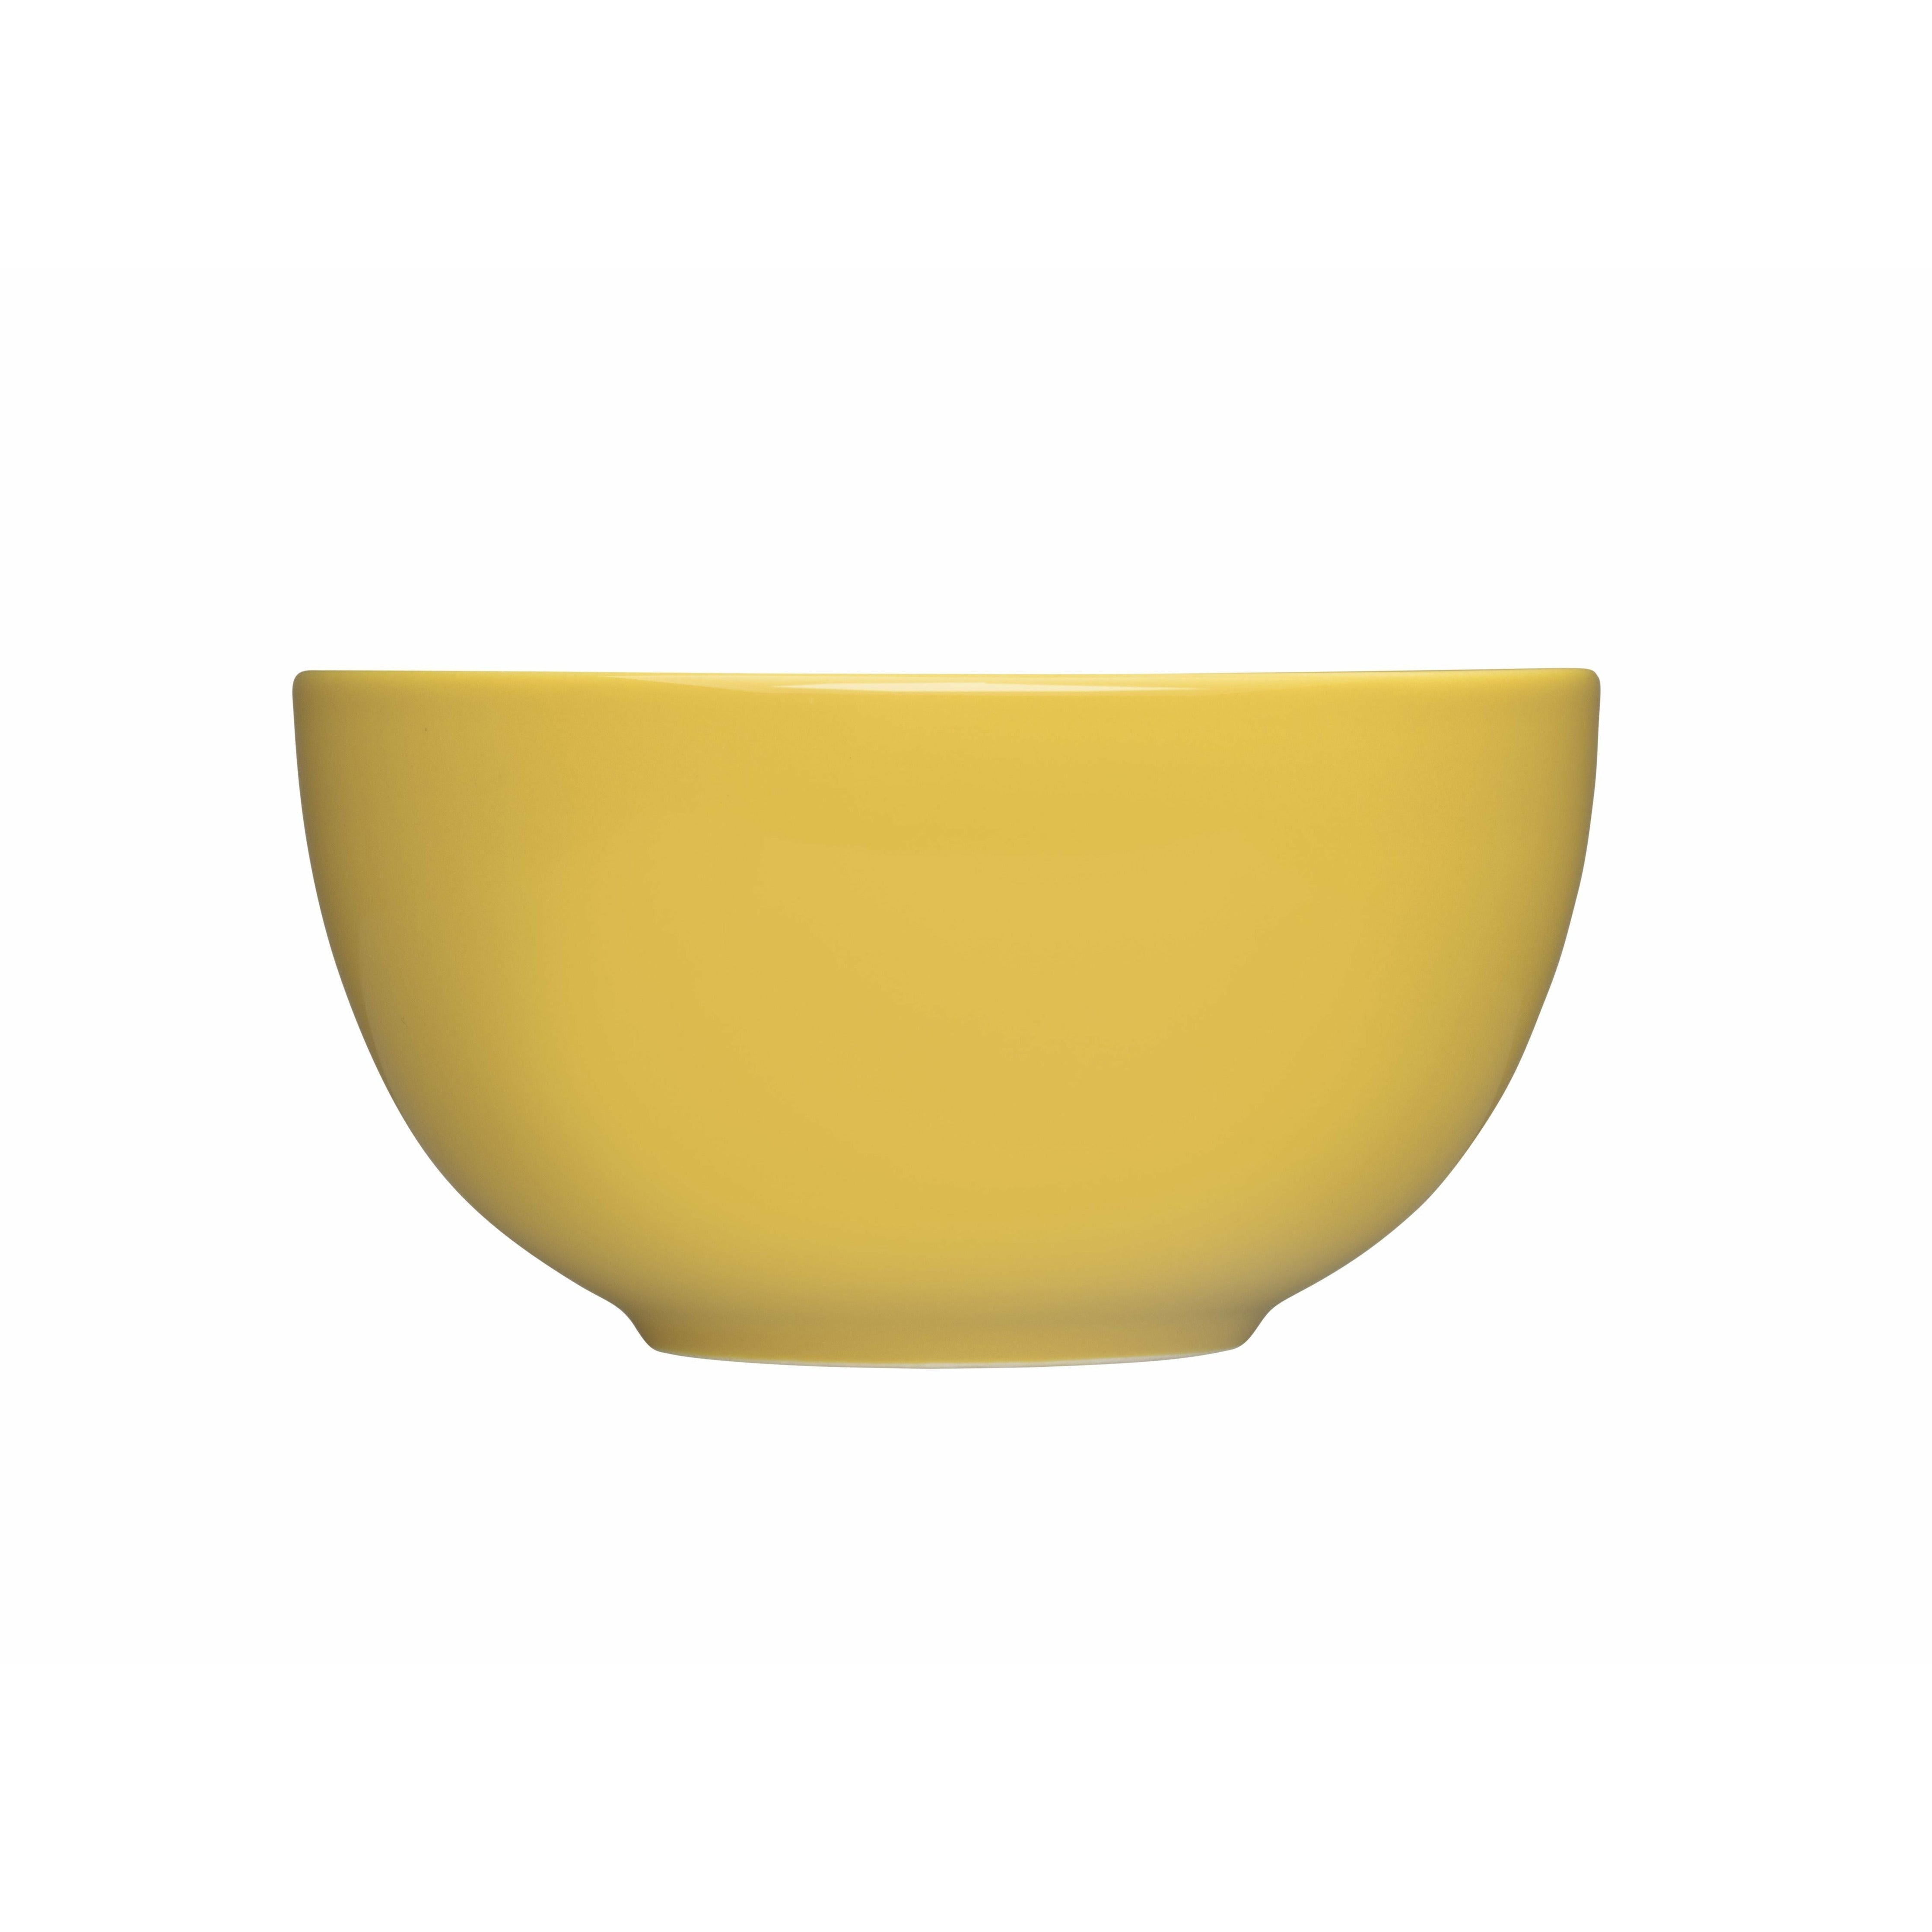 Iittala Teema Bowl 1,65 L, perfeccionando amarillo